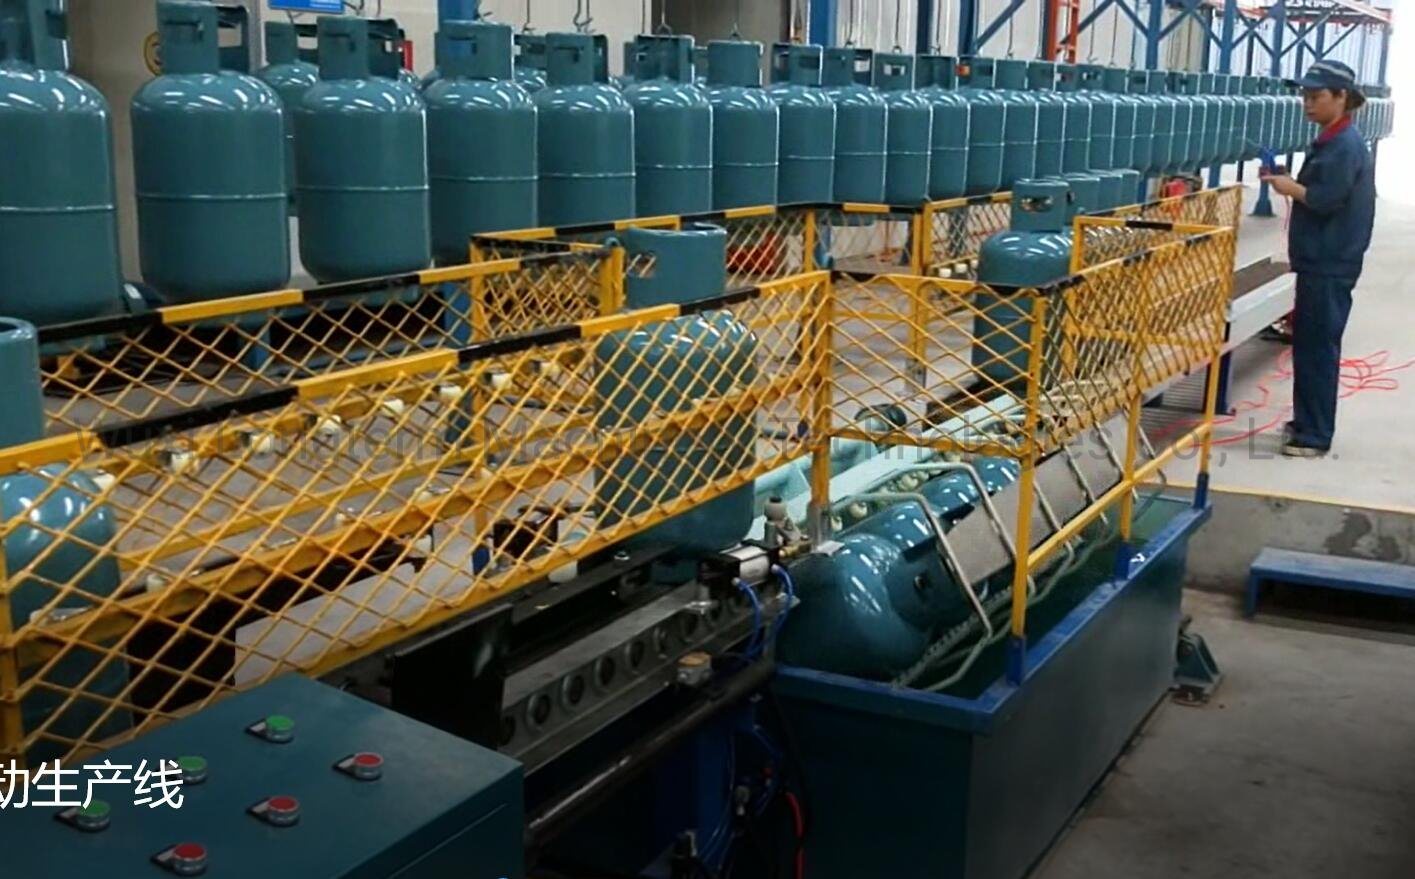 LPG Gas Cylinder Air Leakage Testing Machine, Six / Eight / Ten Stations